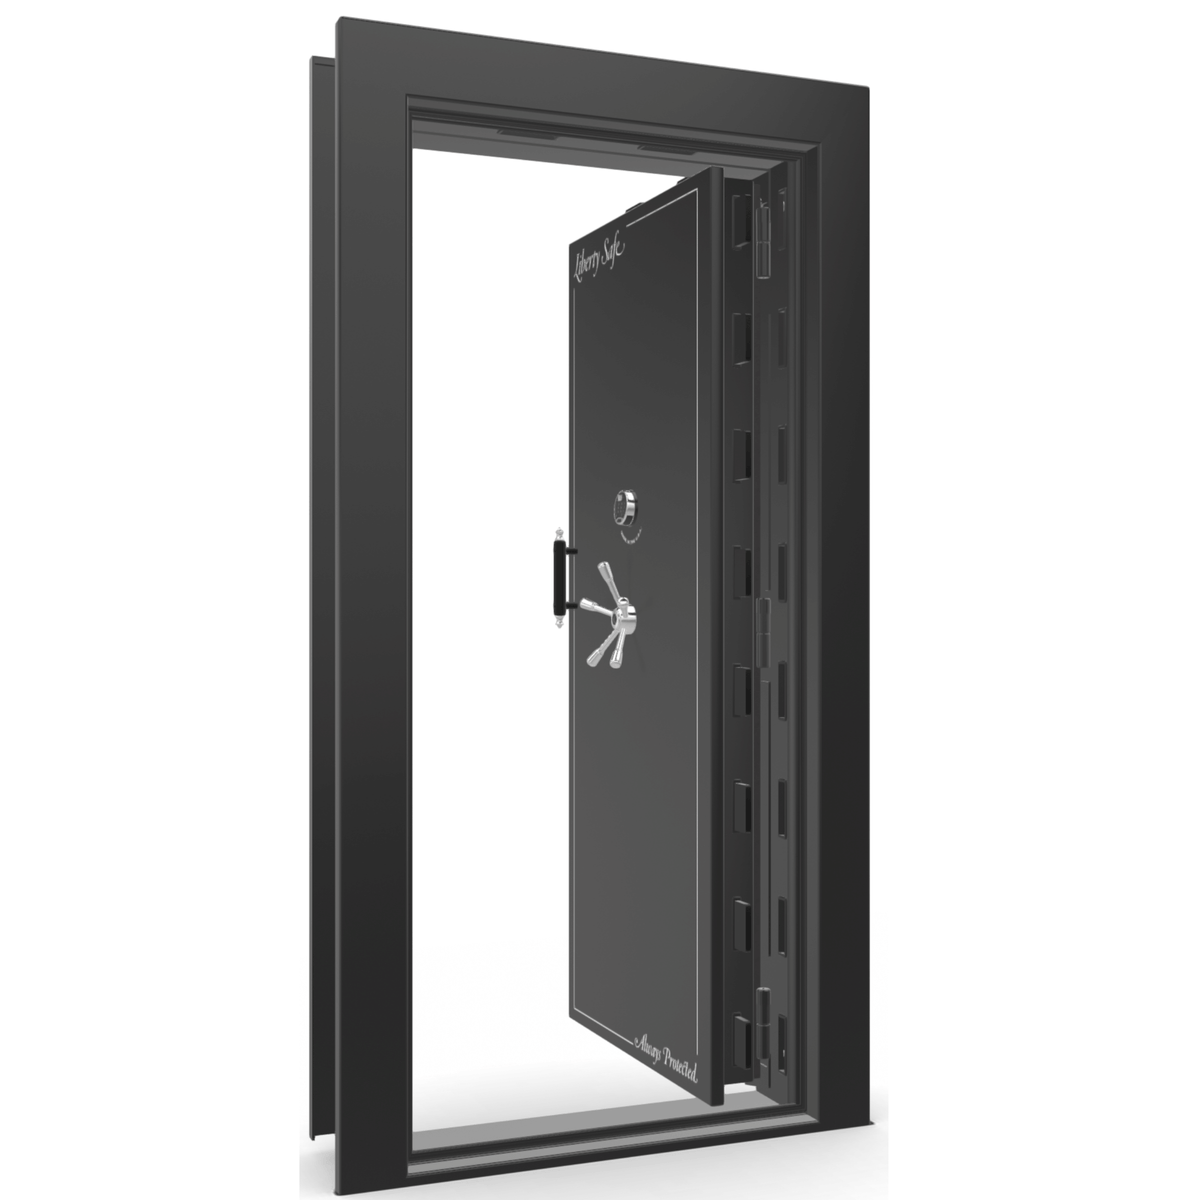 The Beast Vault Door in Black Gloss  with Chrome Electronic Lock, Right Inswing, door open.